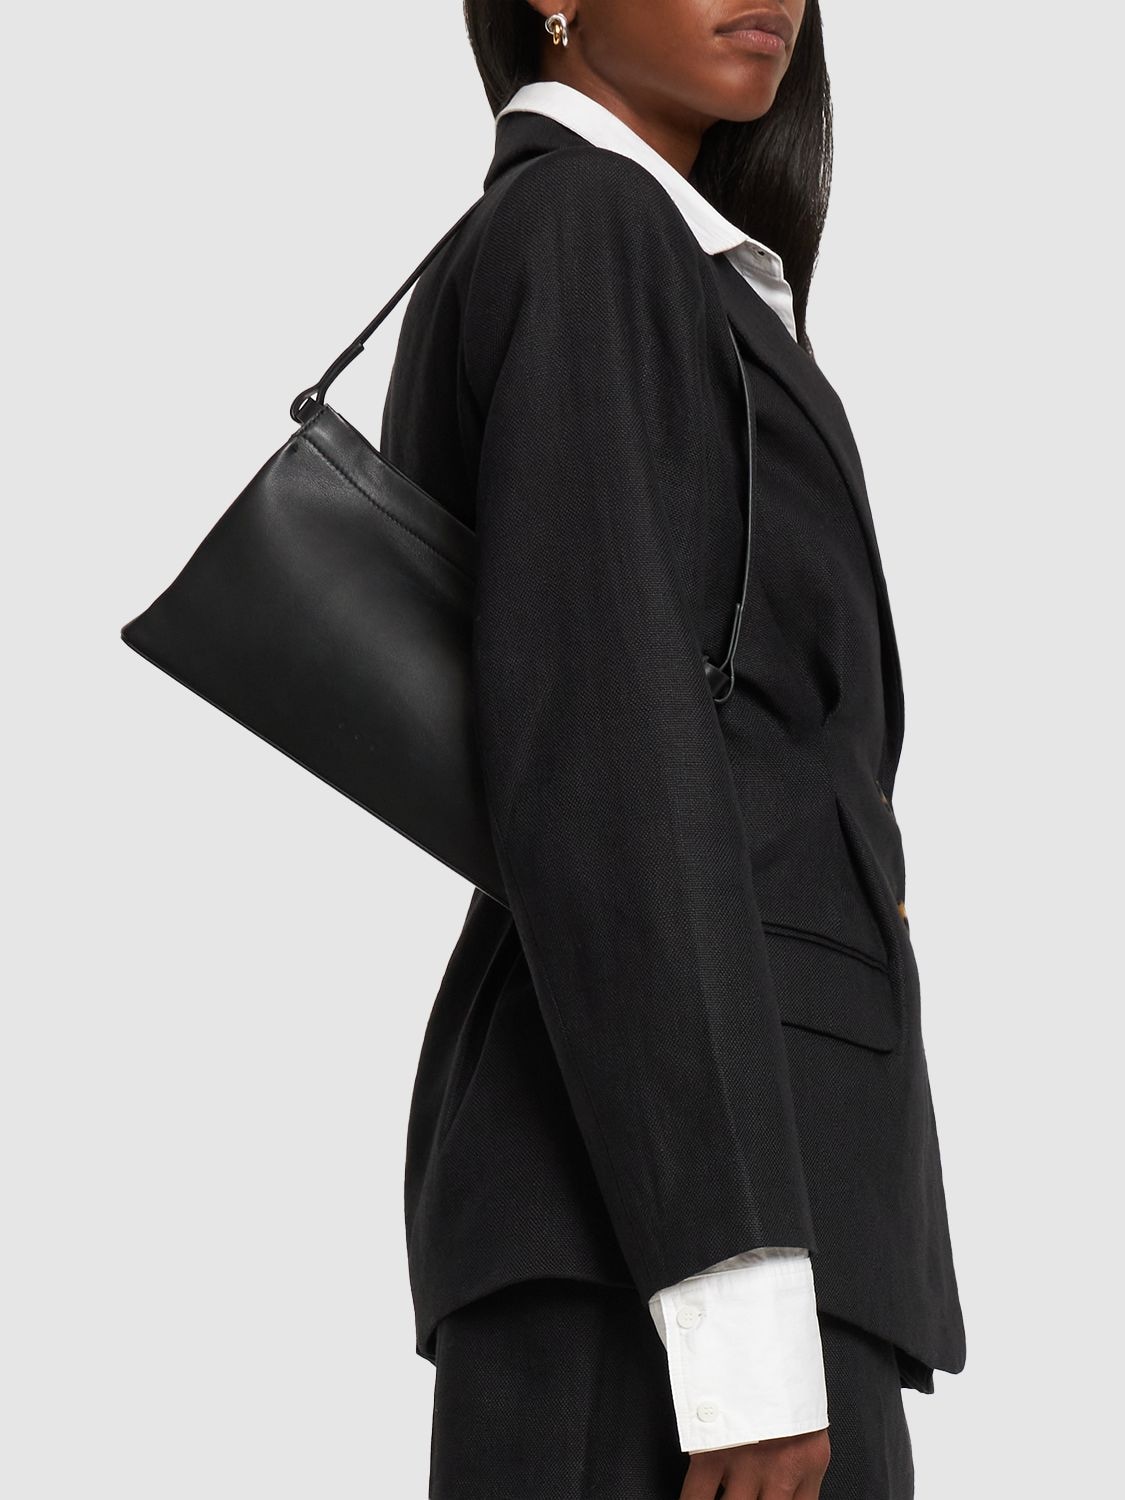 Aesther Ekme Sway Leather Shoulder Bag In Black